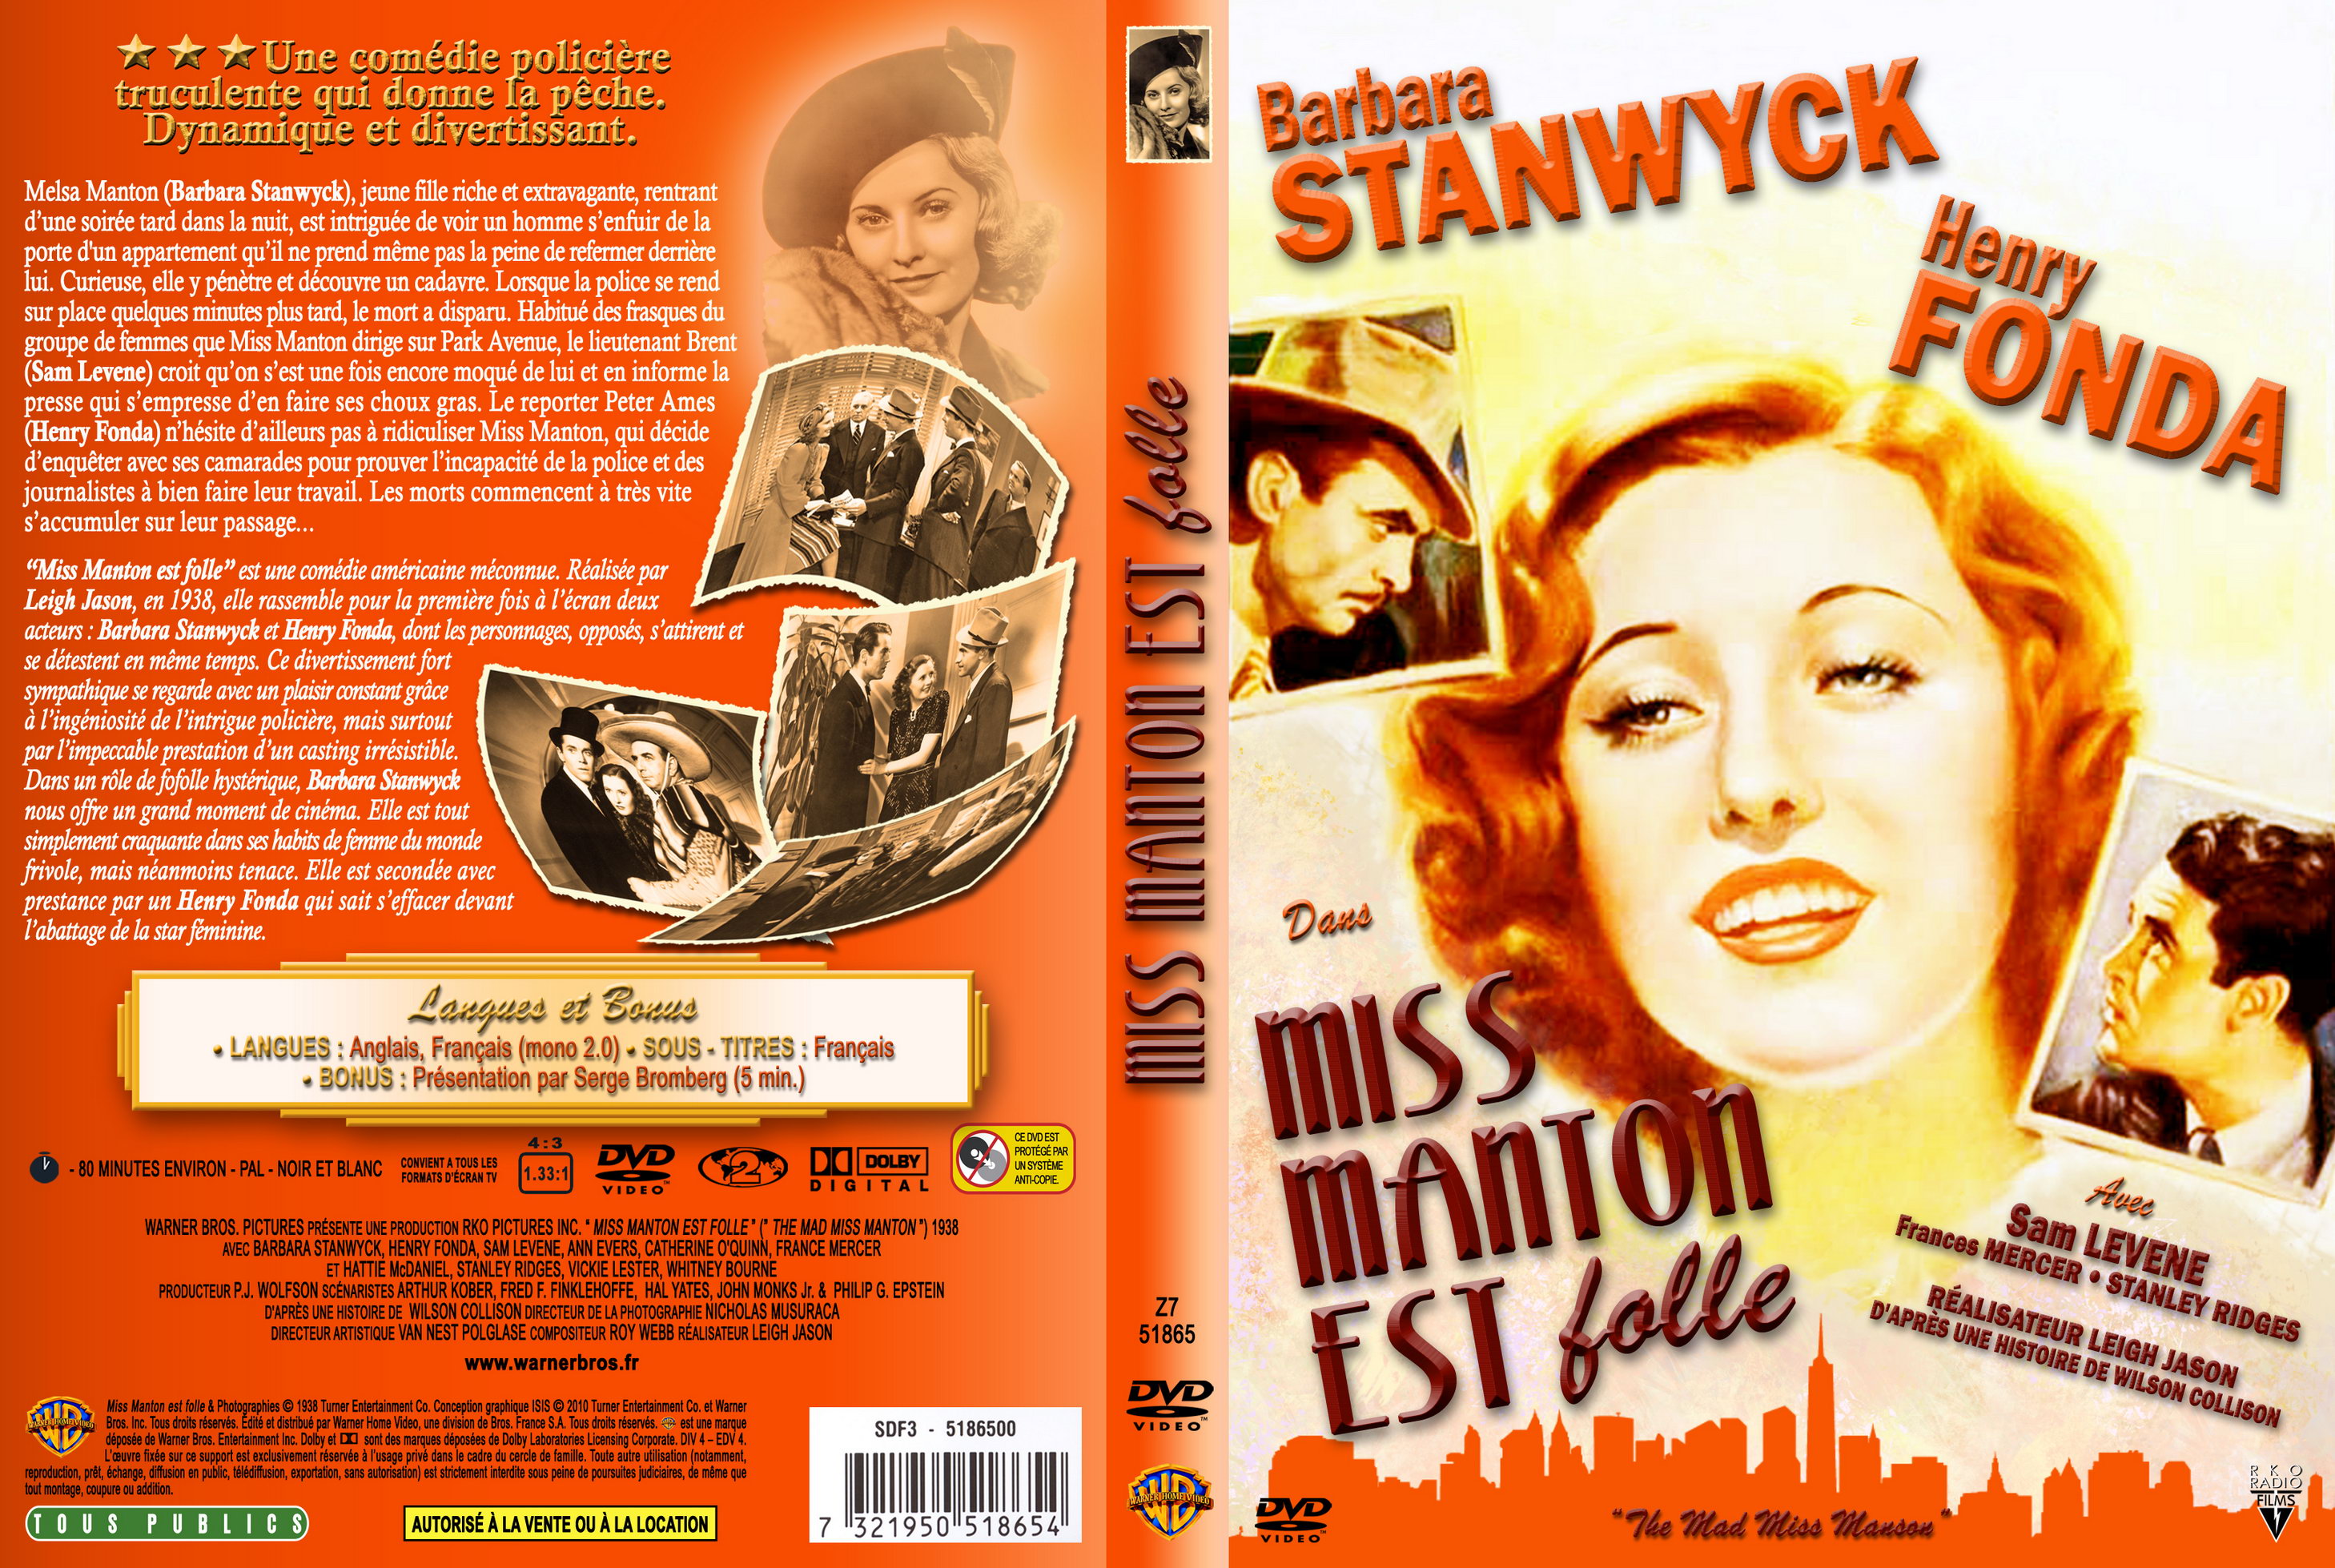 Jaquette DVD Miss manton est folle custom